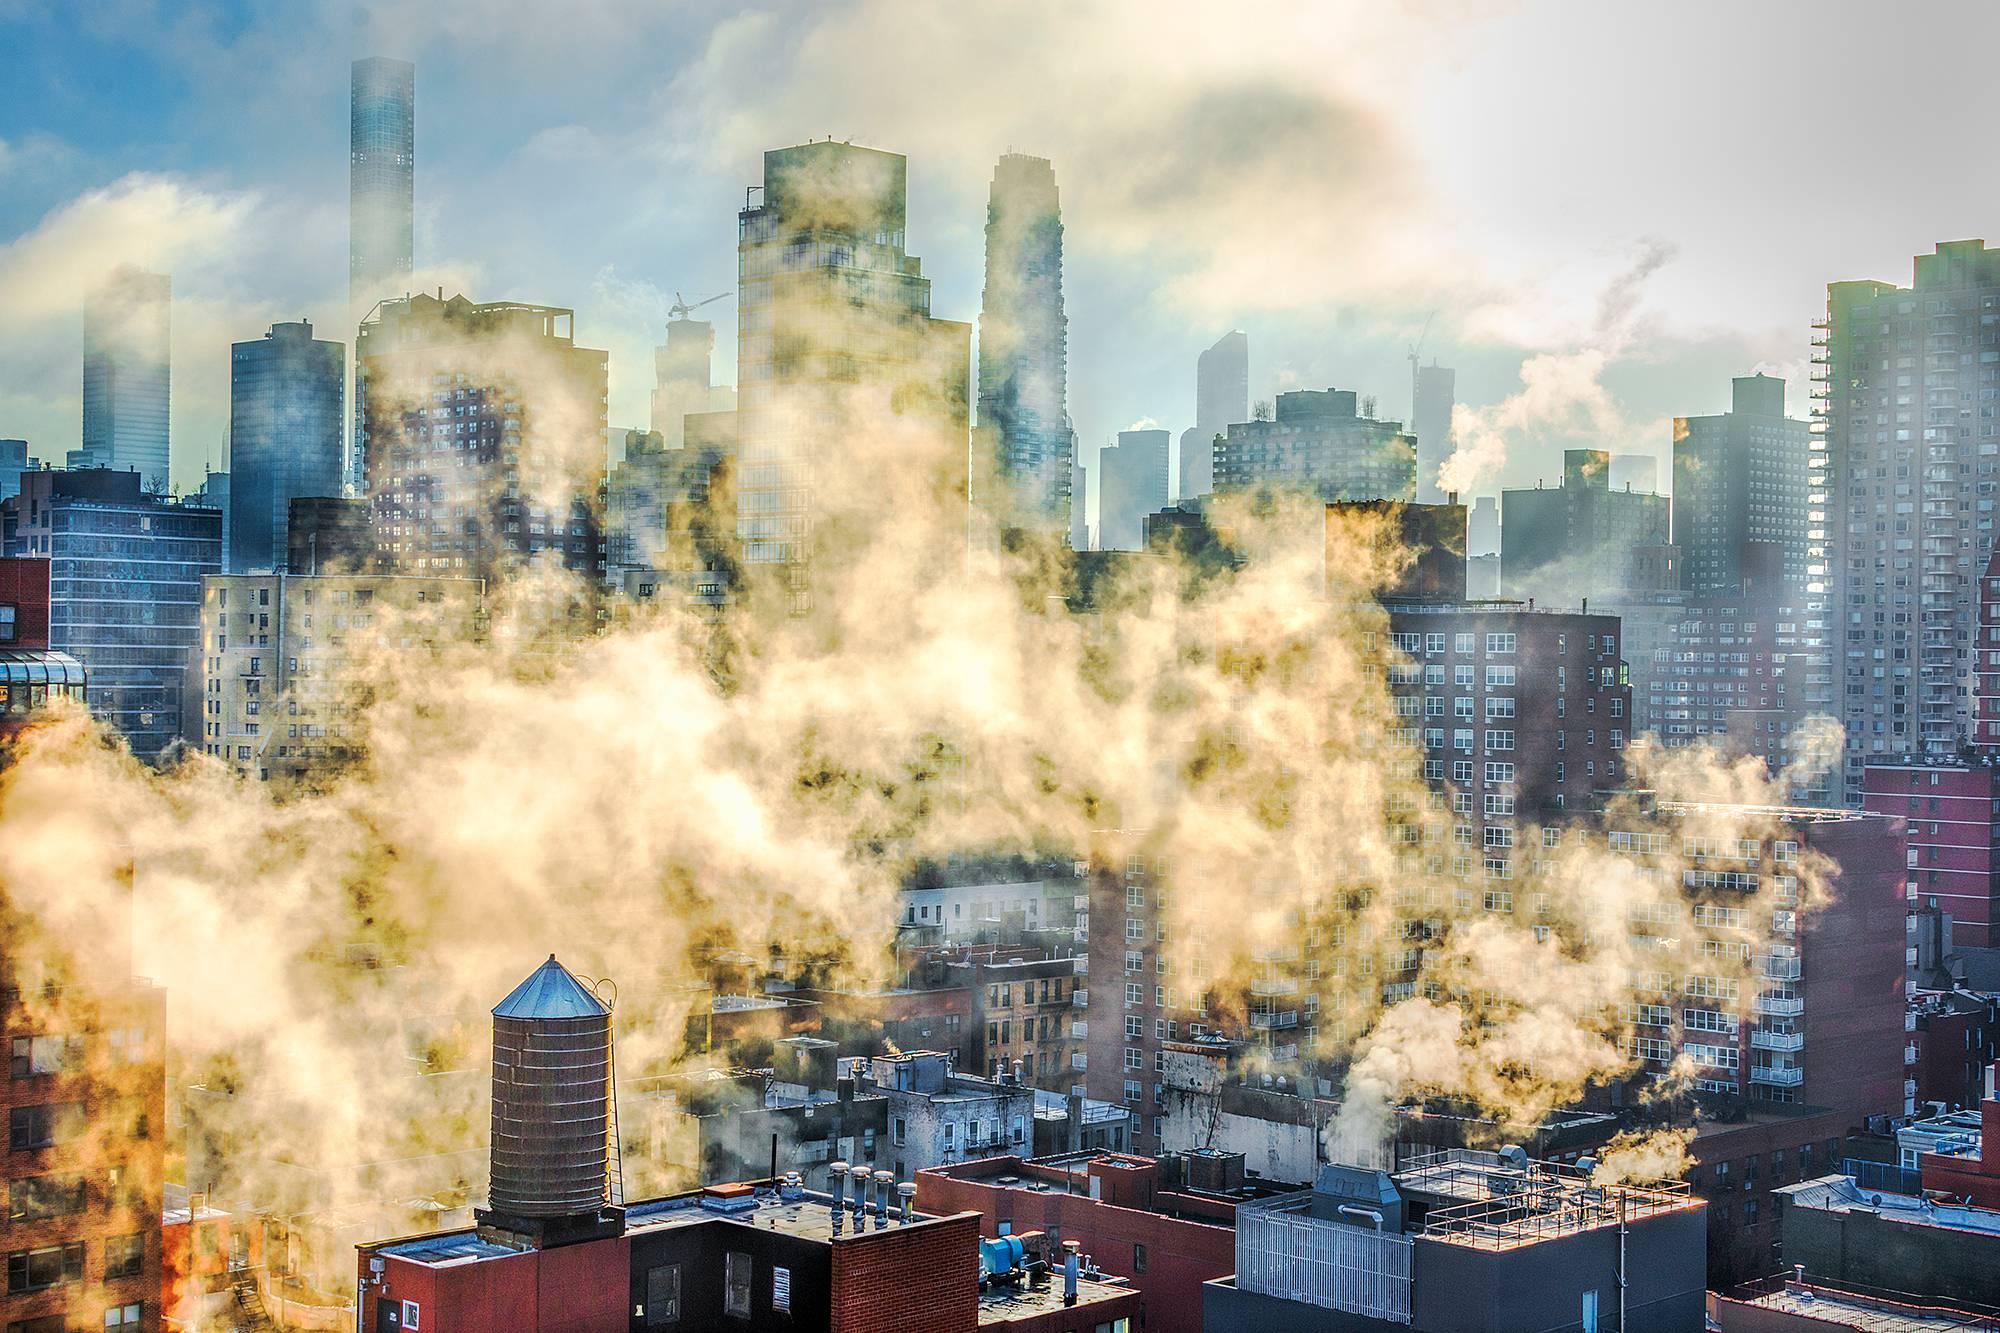 Mitchell Funk Landscape Photograph - New York is Smoking Photograph